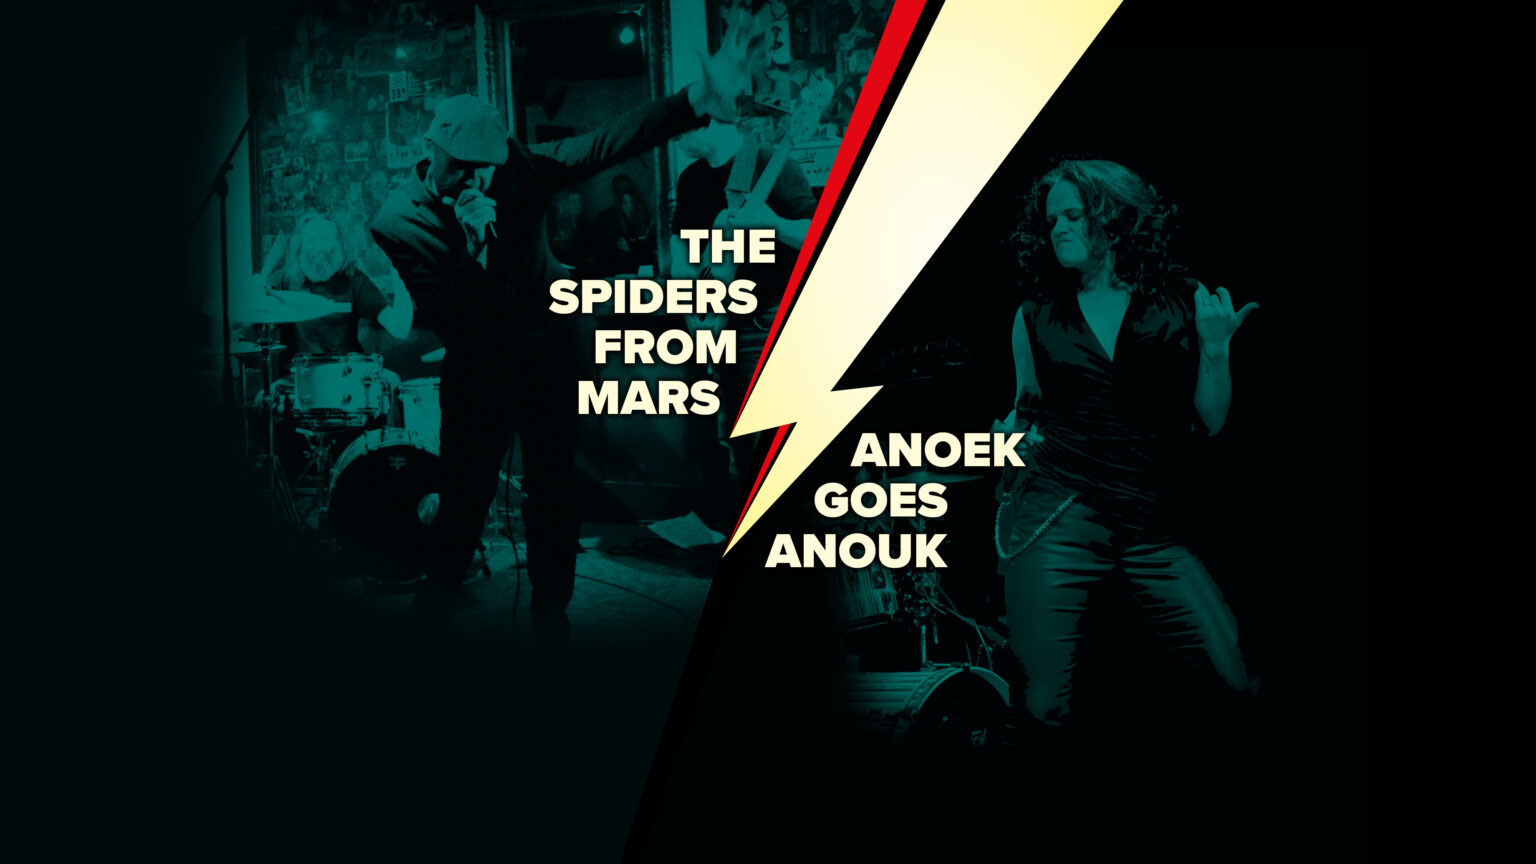 The Spiders from Mars & Anoek goes Anouk